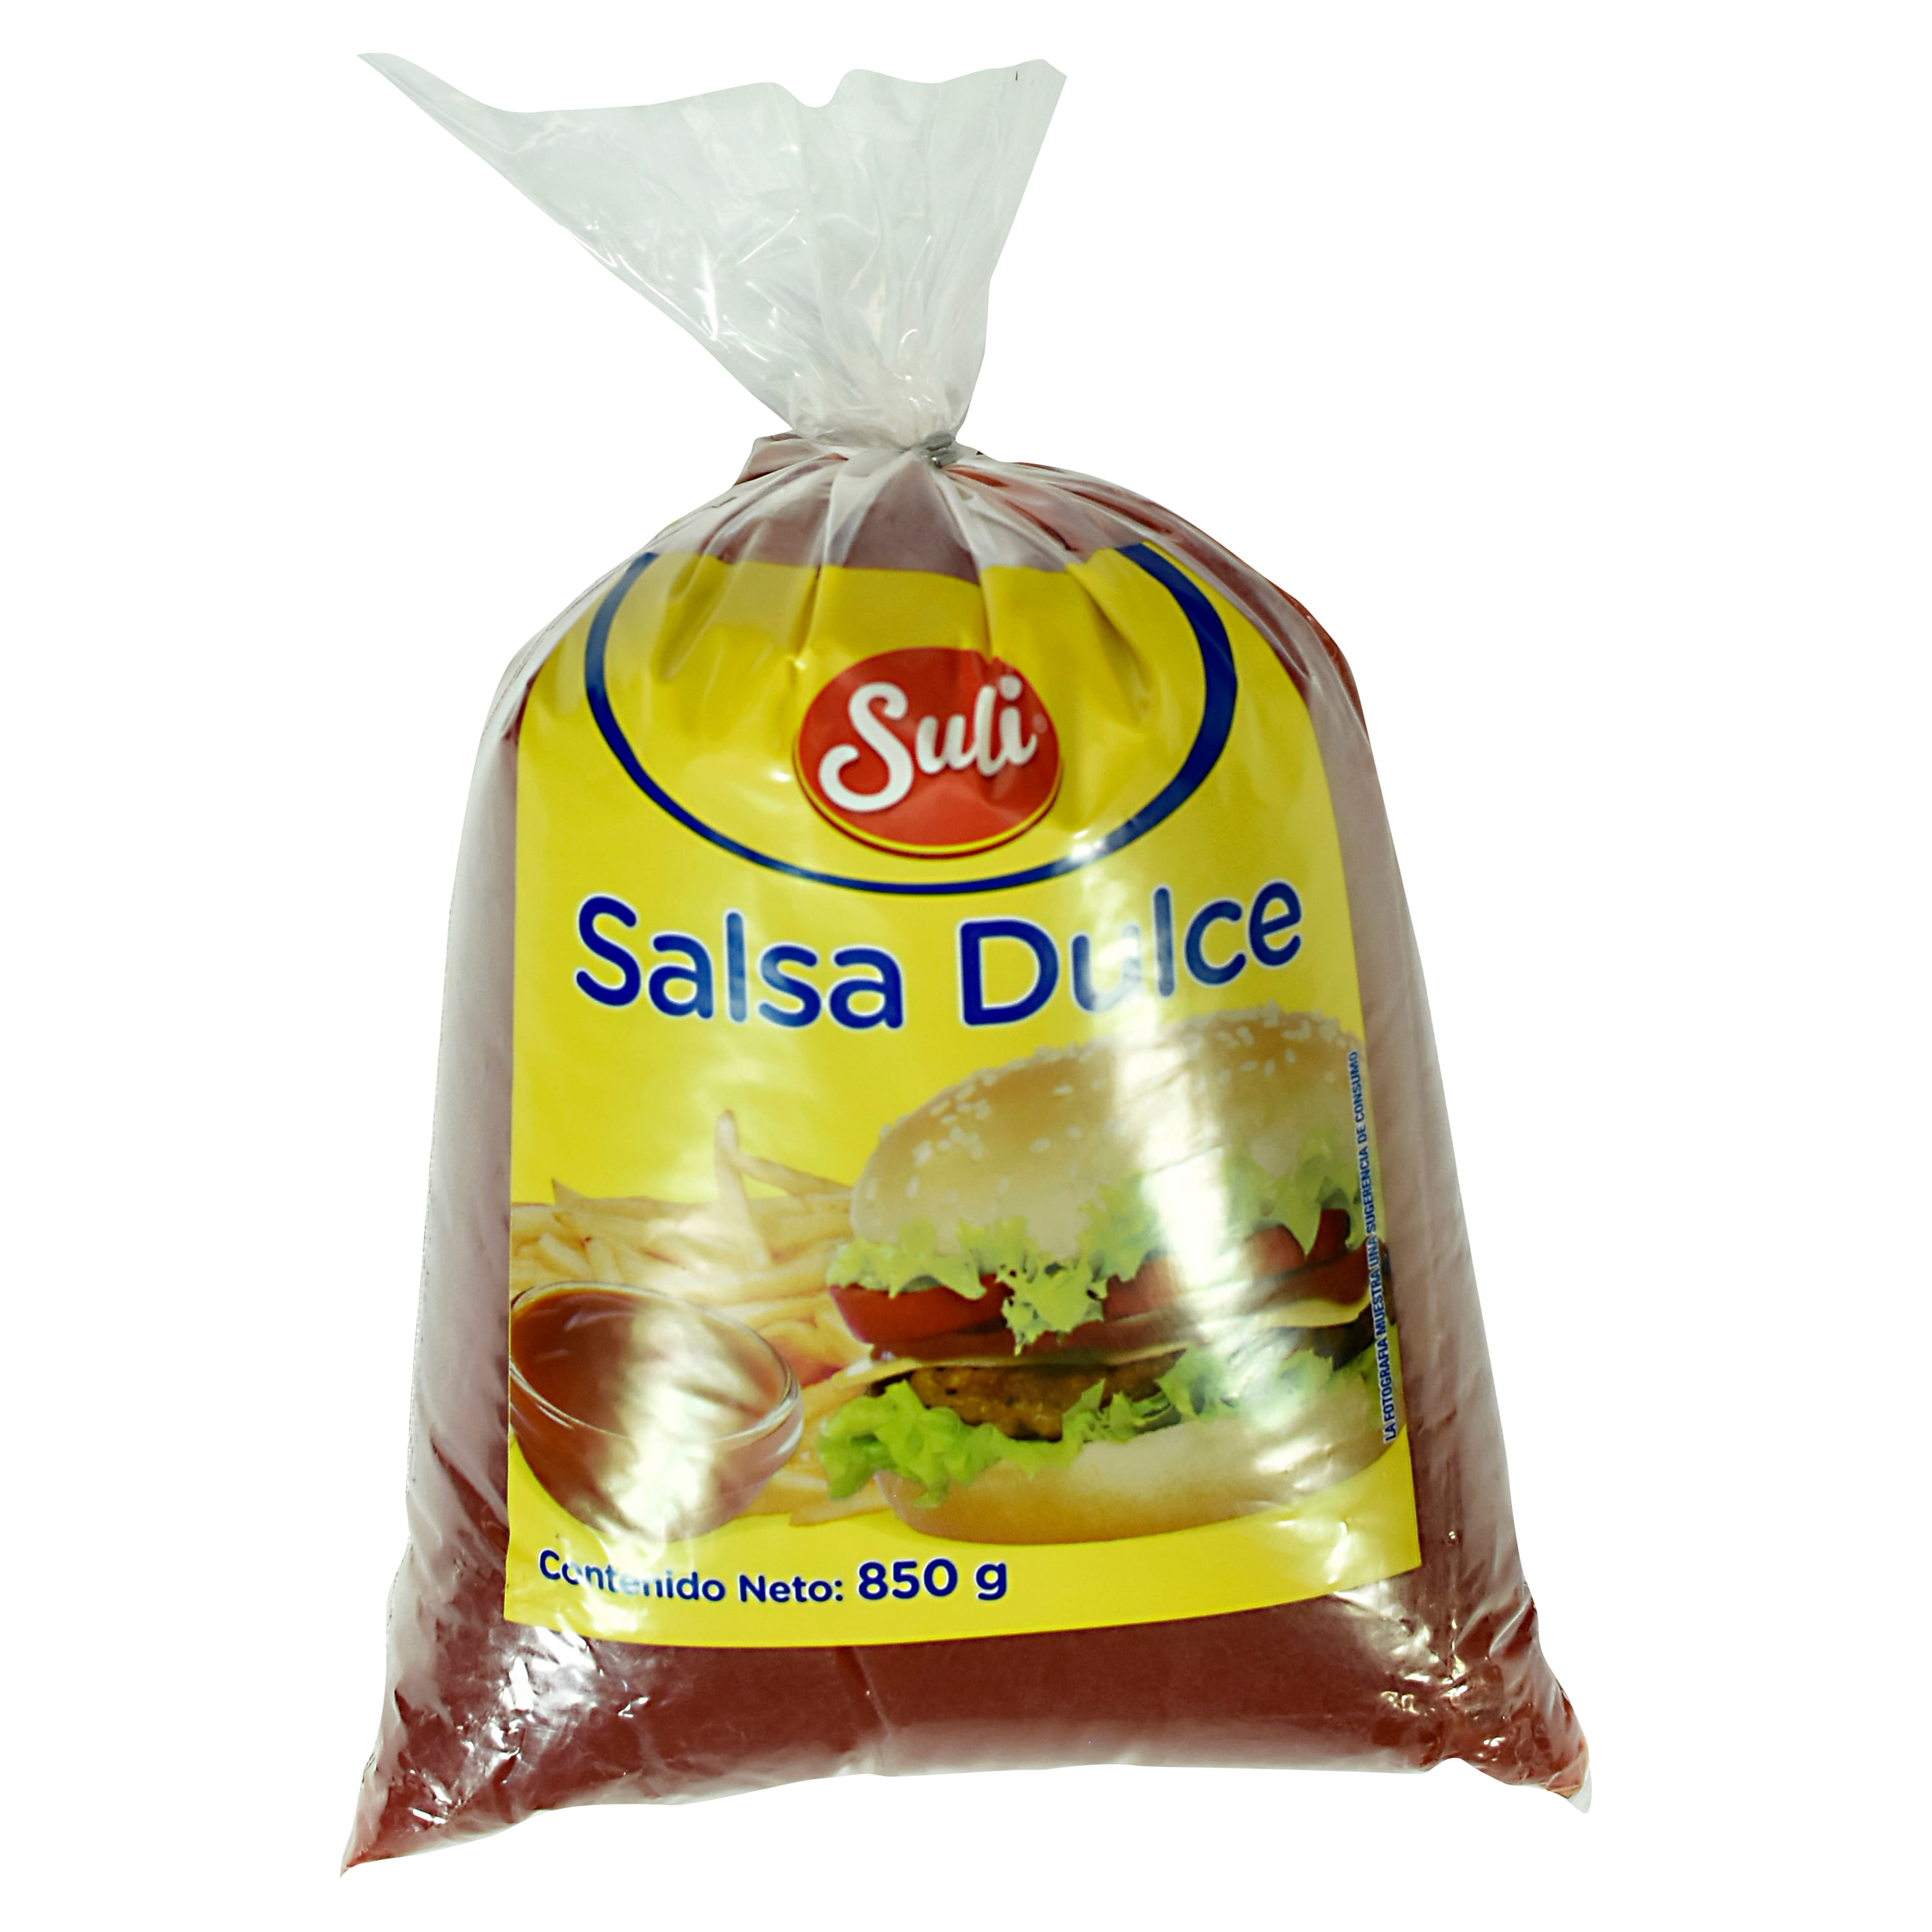 Salsa-Suli-Ketchup-En-Bolsa-850Gr-1-31812